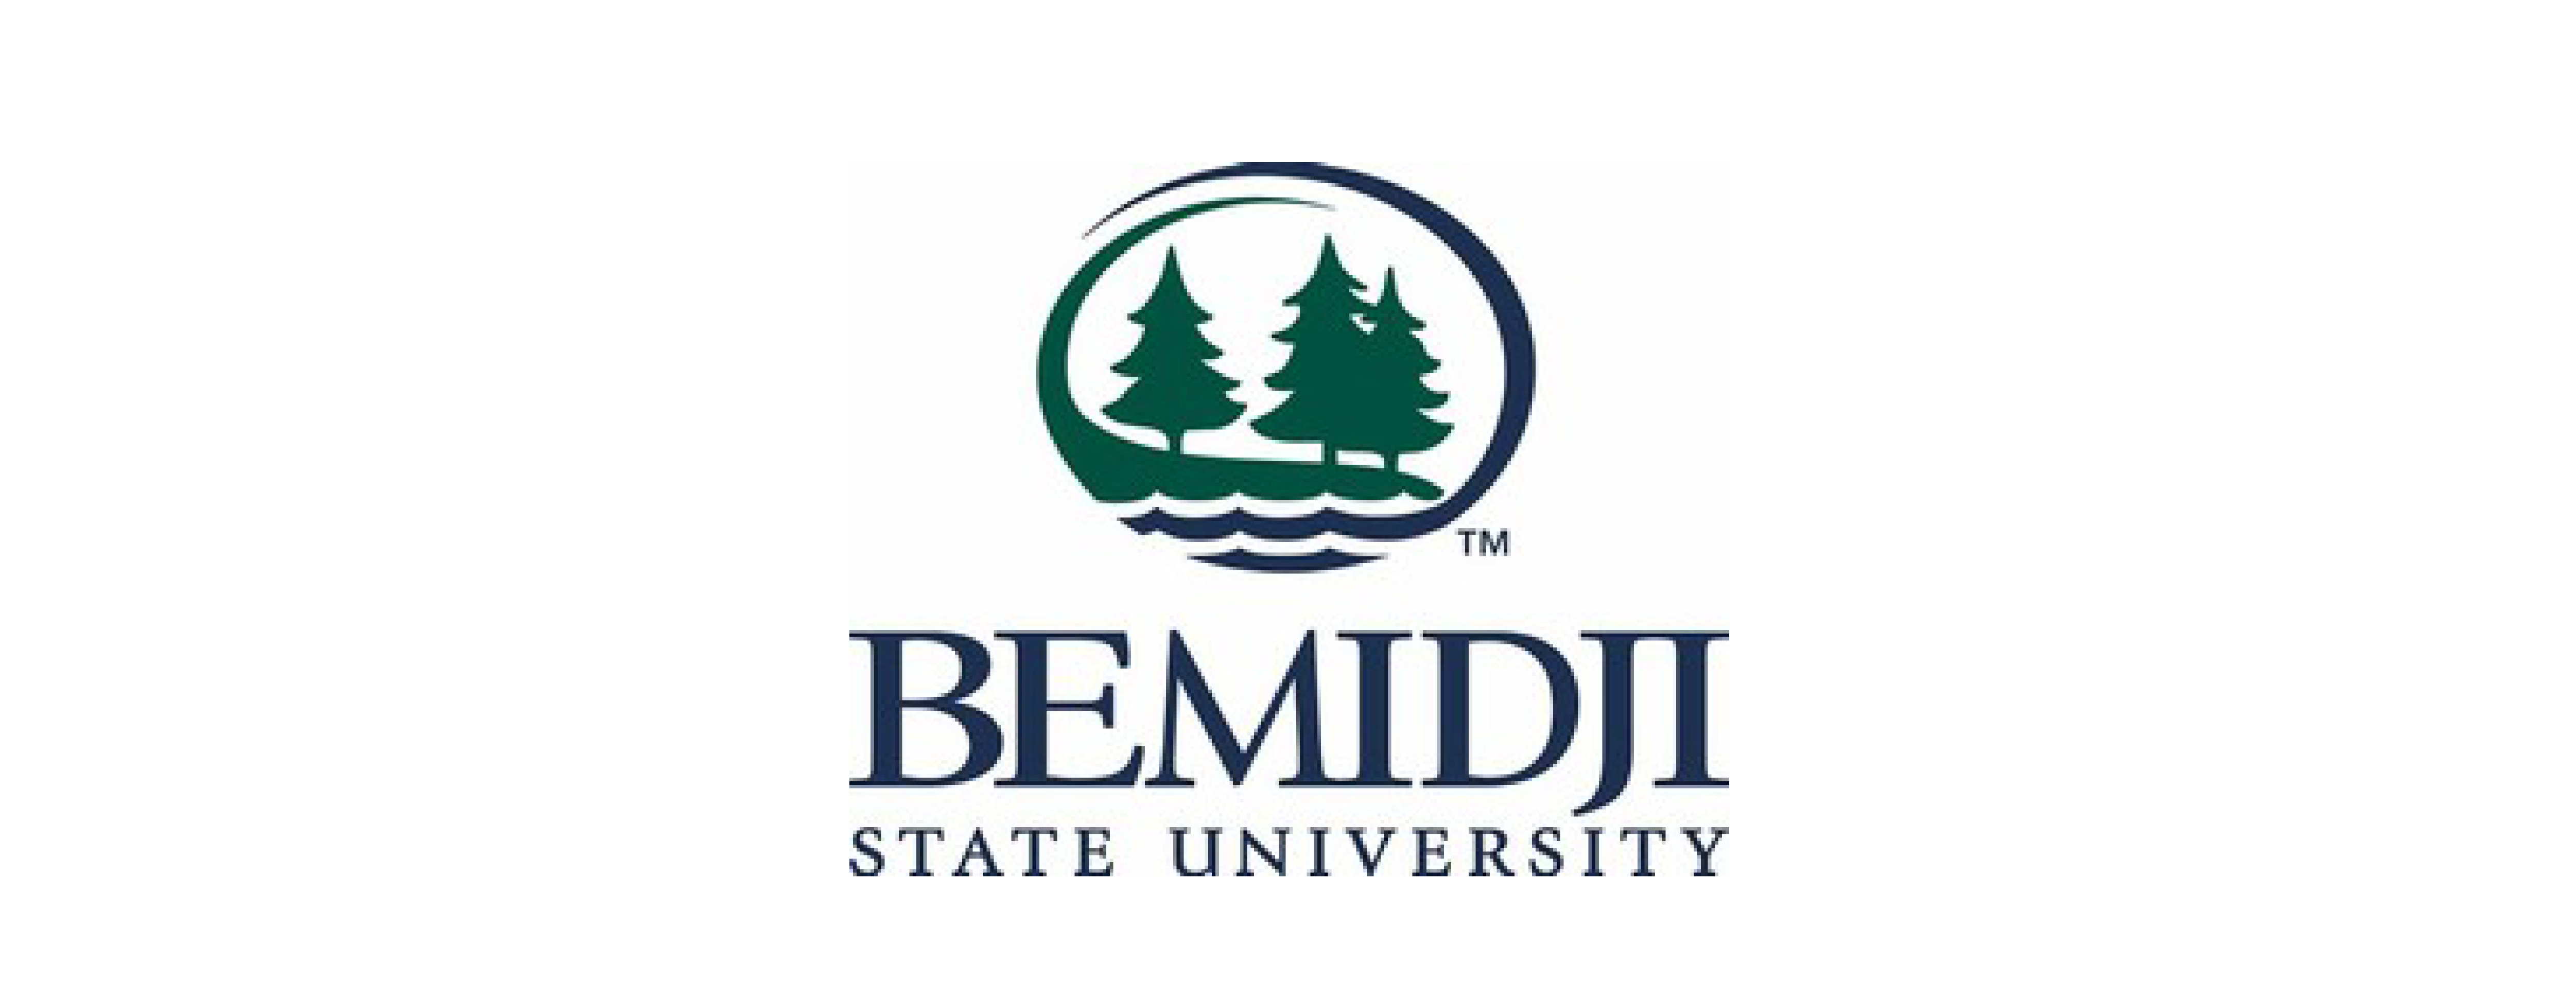 Bemidji State University, logo.